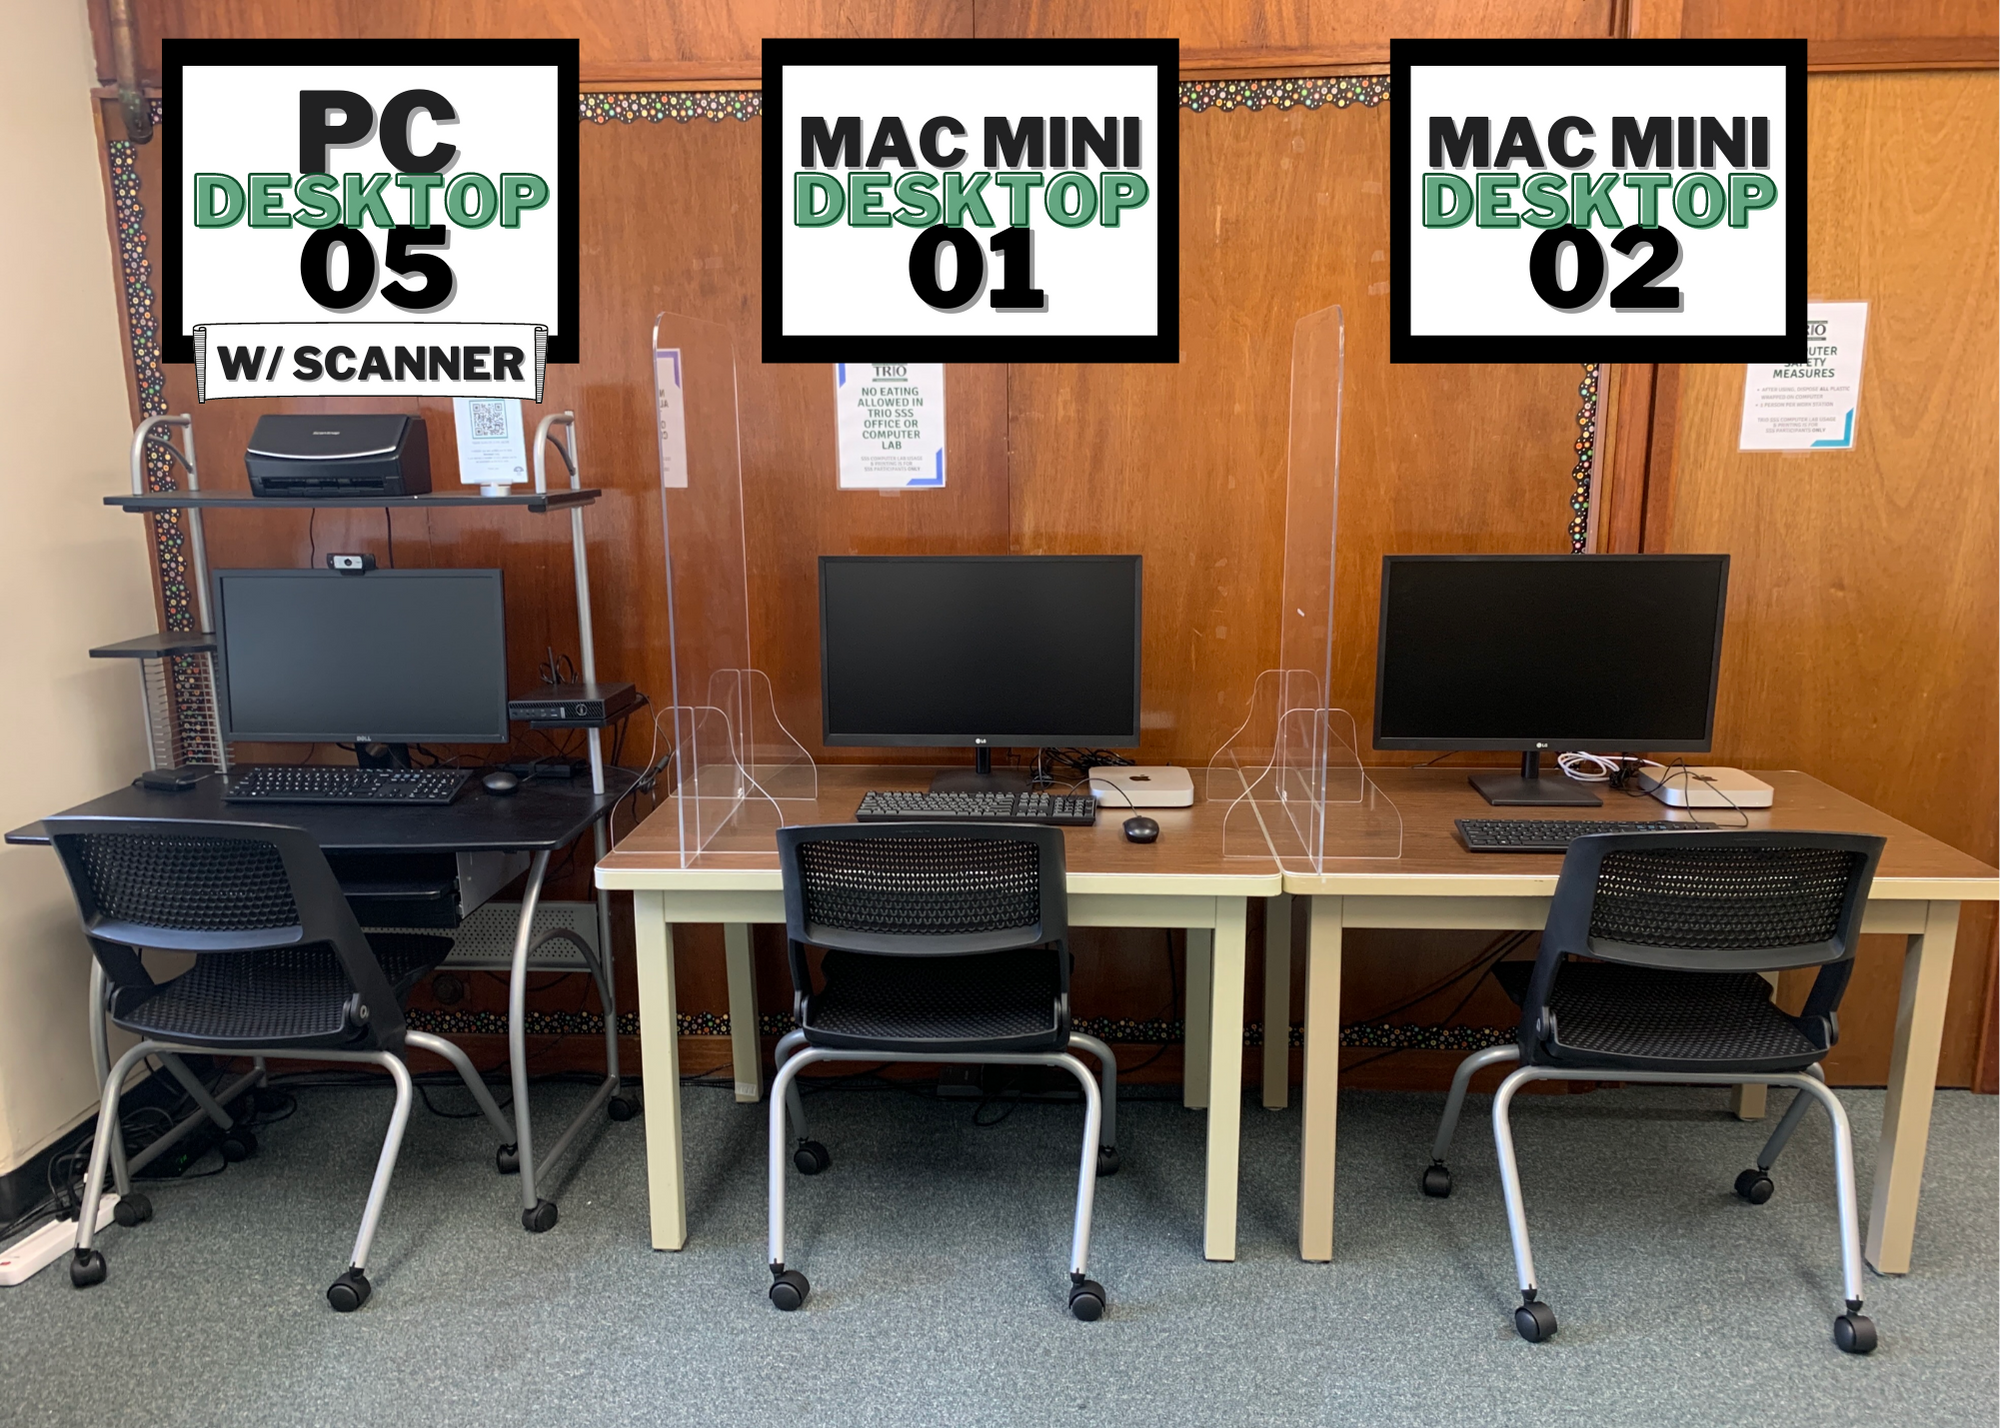 computer lab desktops 5 and mac mini 1-2